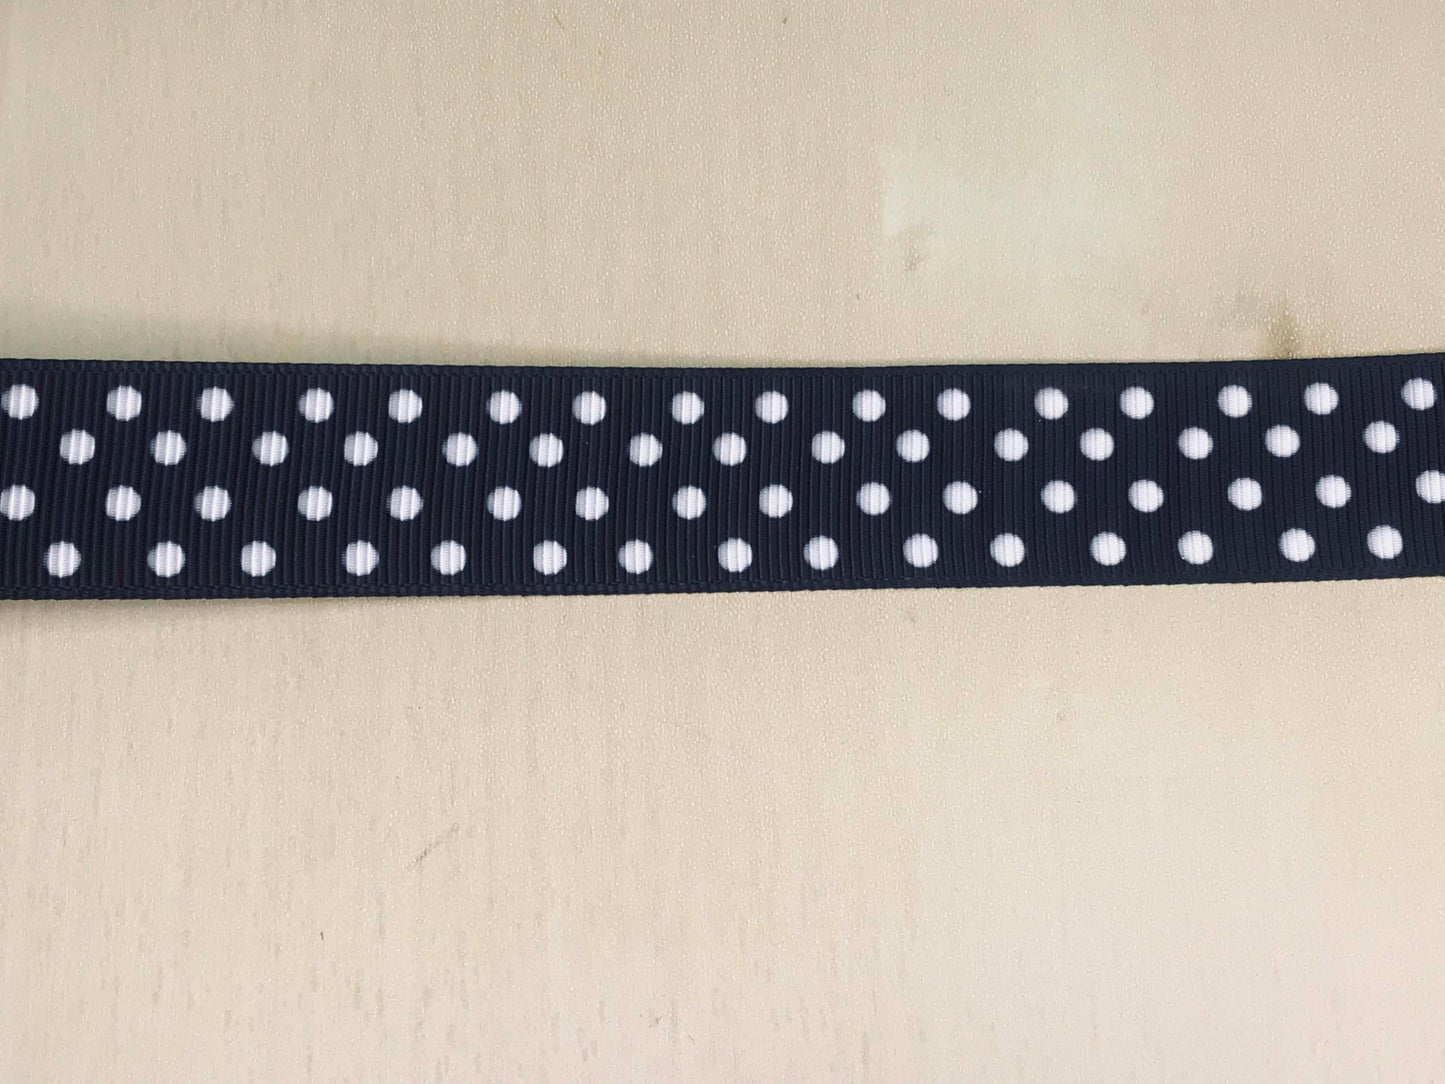 7/8" Black and White Polka Dot Printed Grosgrain Ribbon